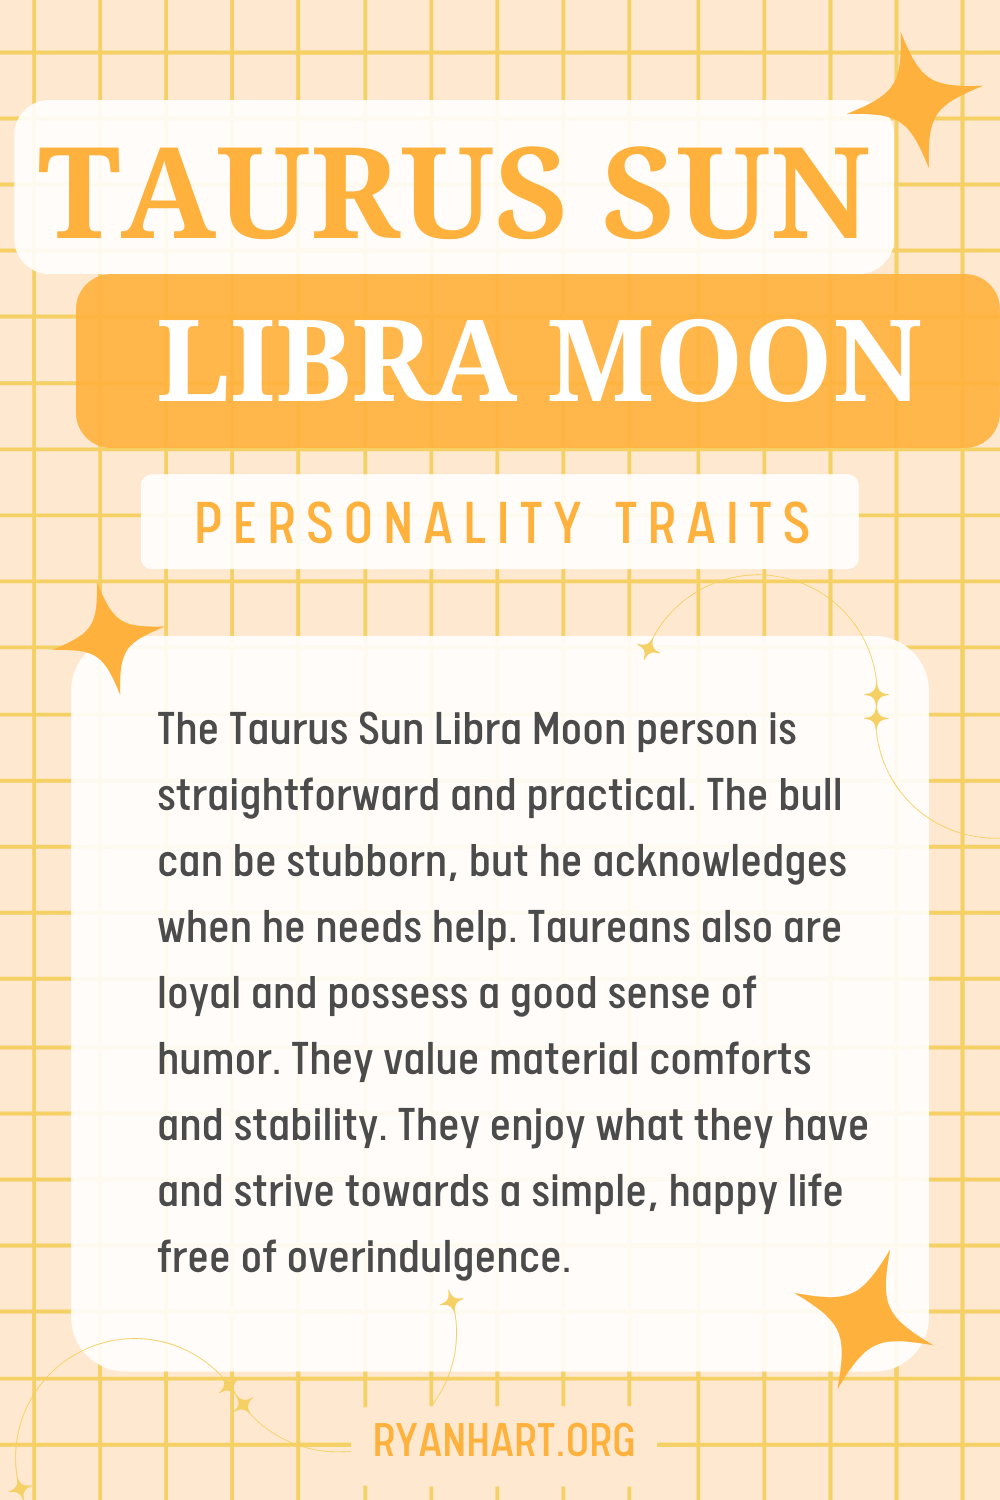 Taurus Sun Libra Moon Description